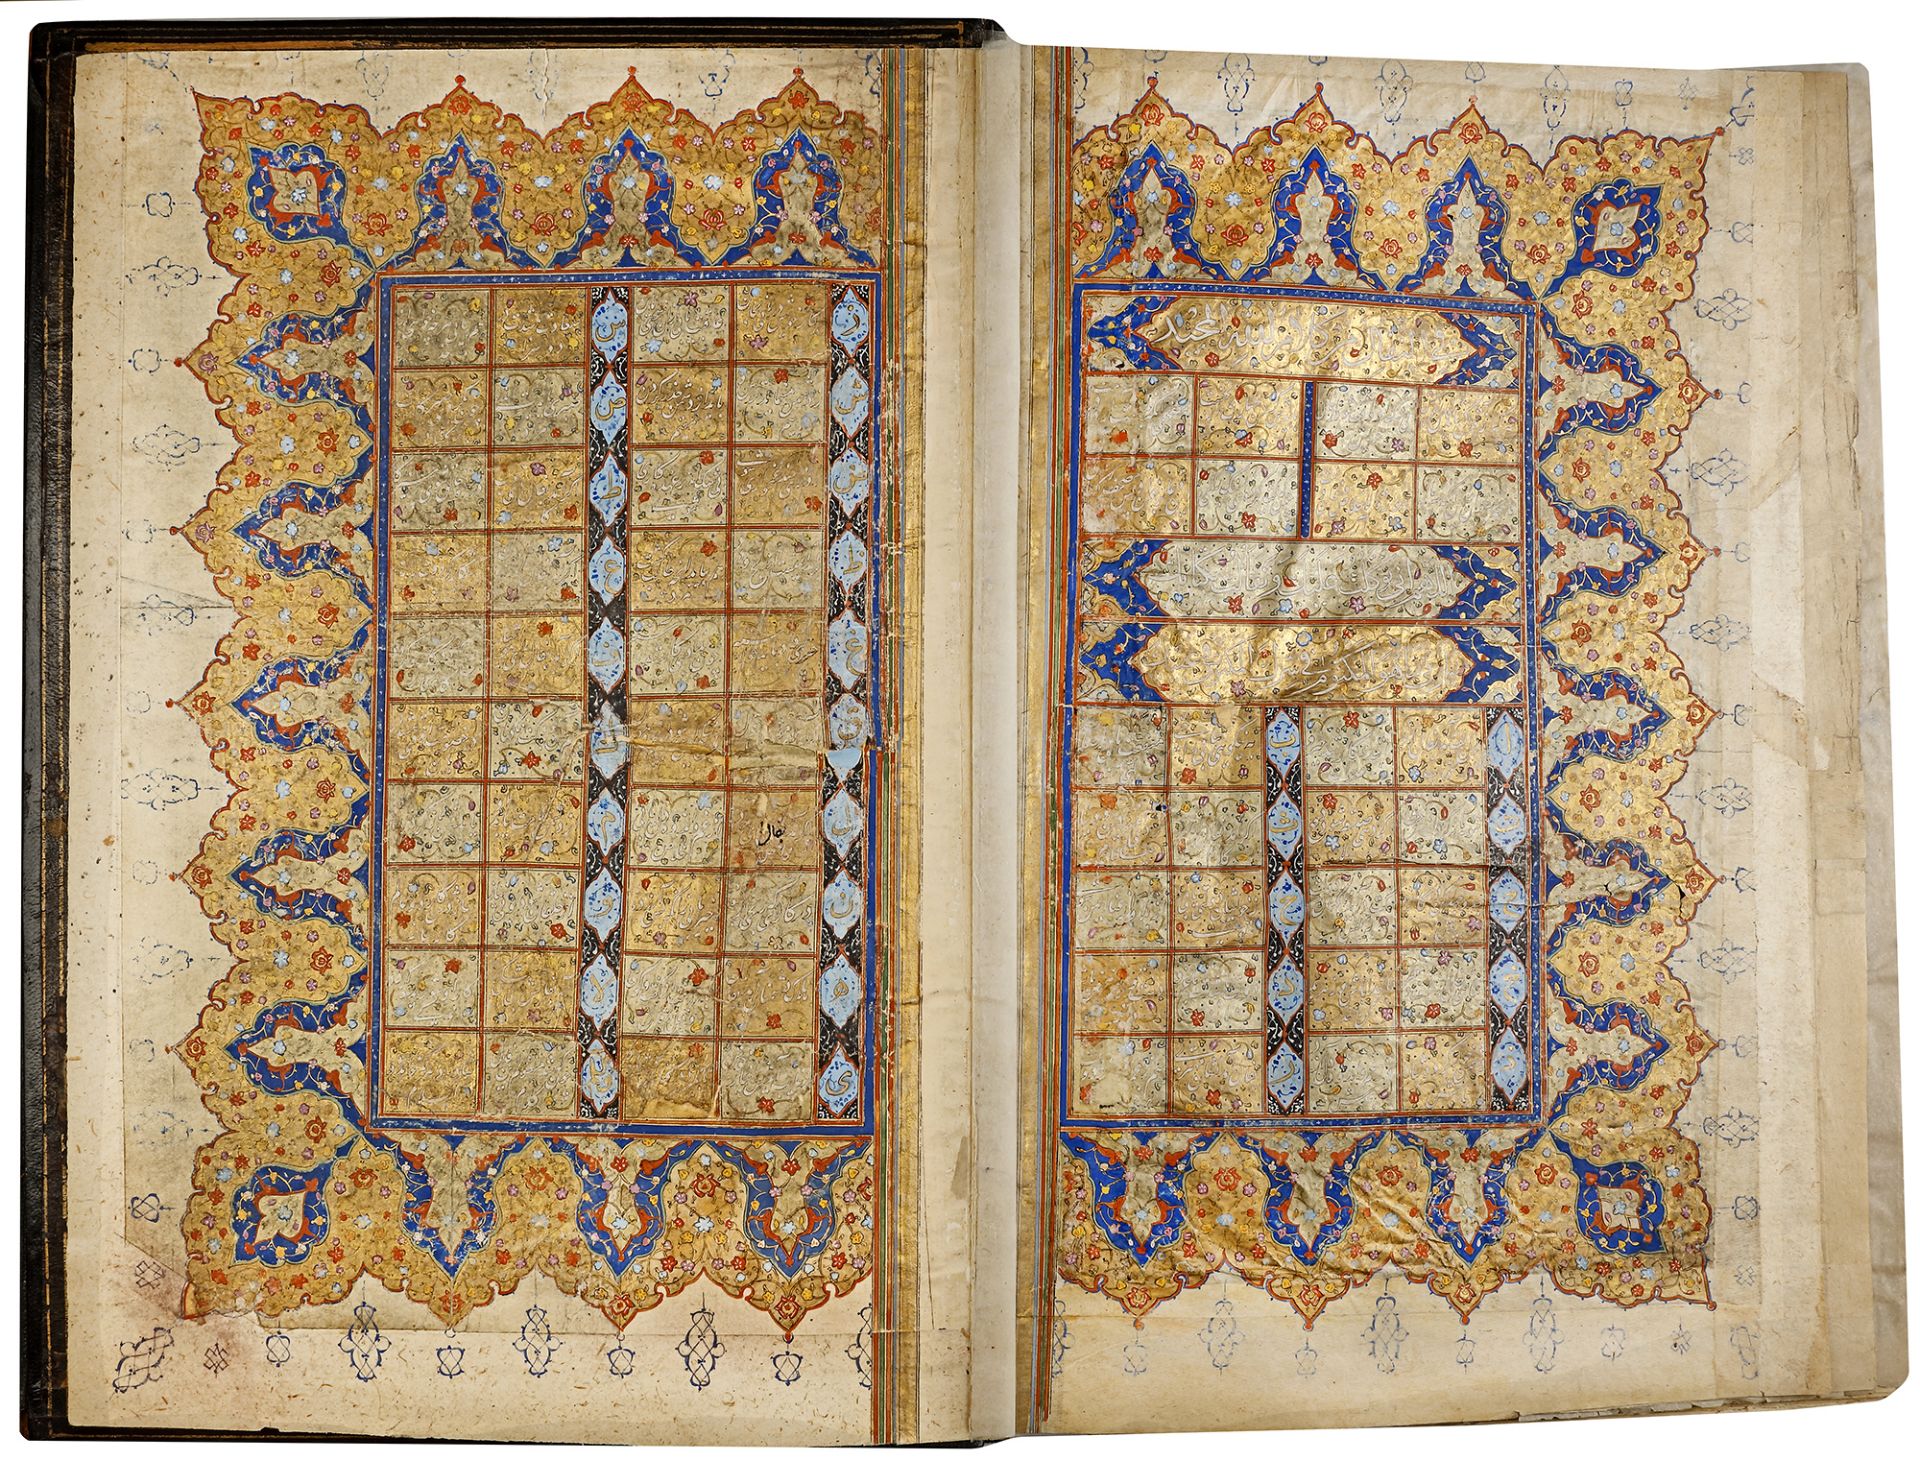 A LARGE ILLUMINATED QURAN, COPIED BY 'ALA'-AL-DIN MUHAMMAD AL-TABRIZI SAFAVID, PERSIA, 16TH CENT - Image 26 of 26